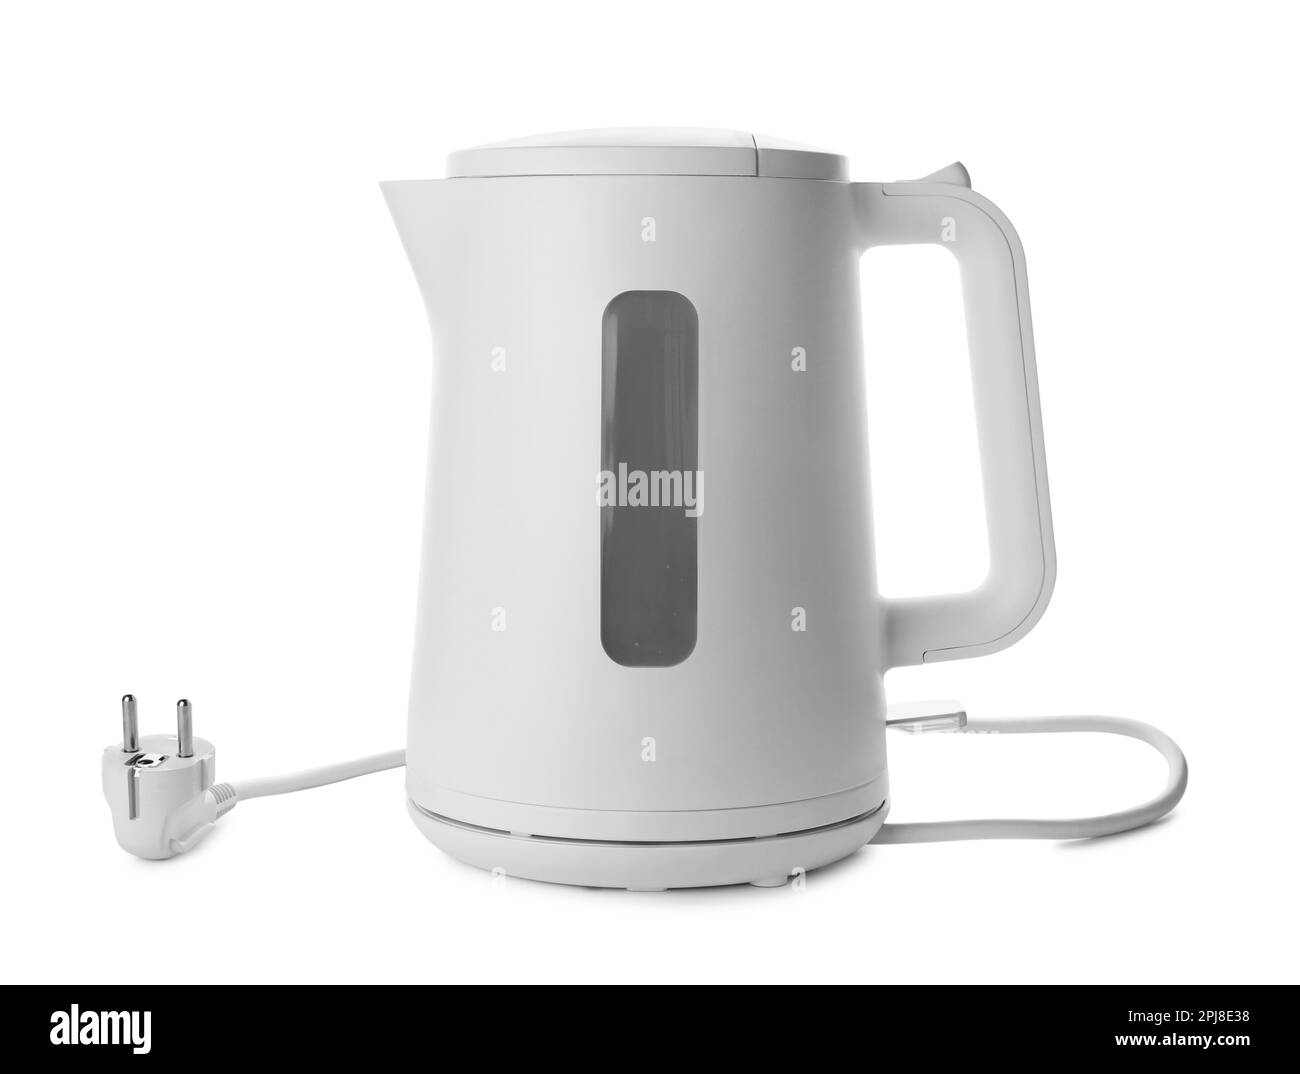 https://c8.alamy.com/comp/2PJ8E38/modern-electric-kettle-with-base-and-plug-isolated-on-white-2PJ8E38.jpg